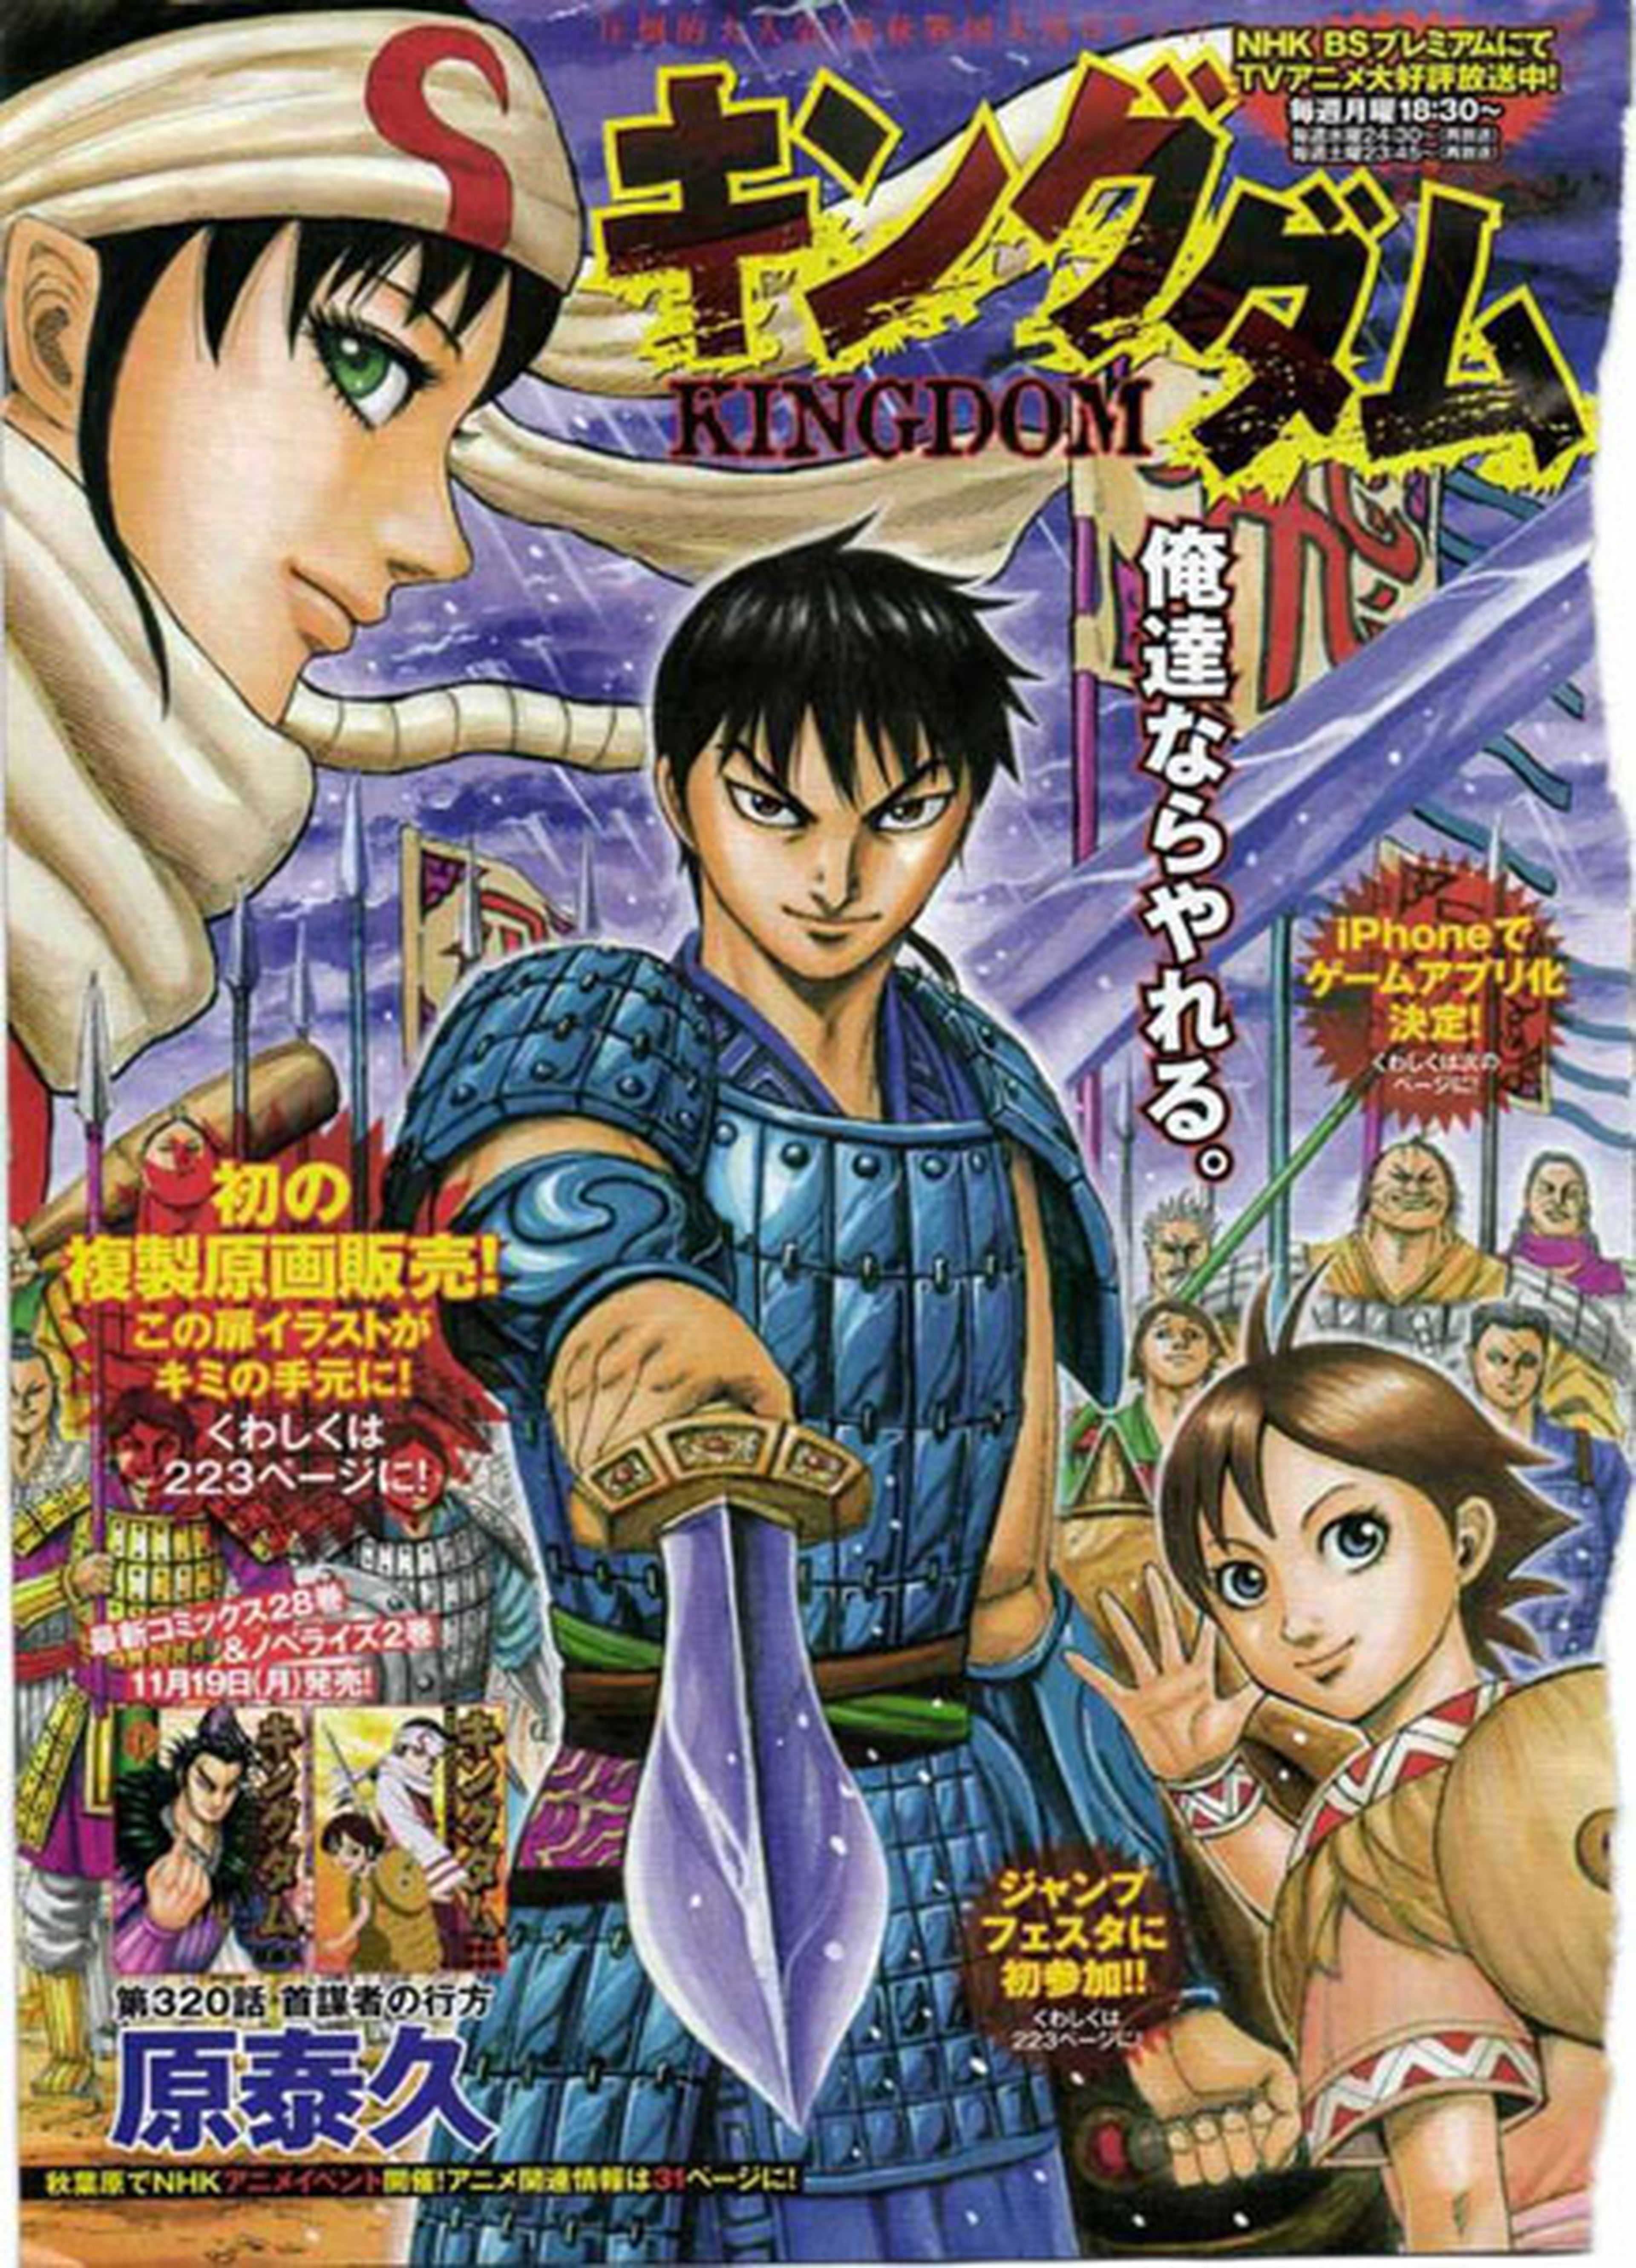 One-shot del manga Kingdom